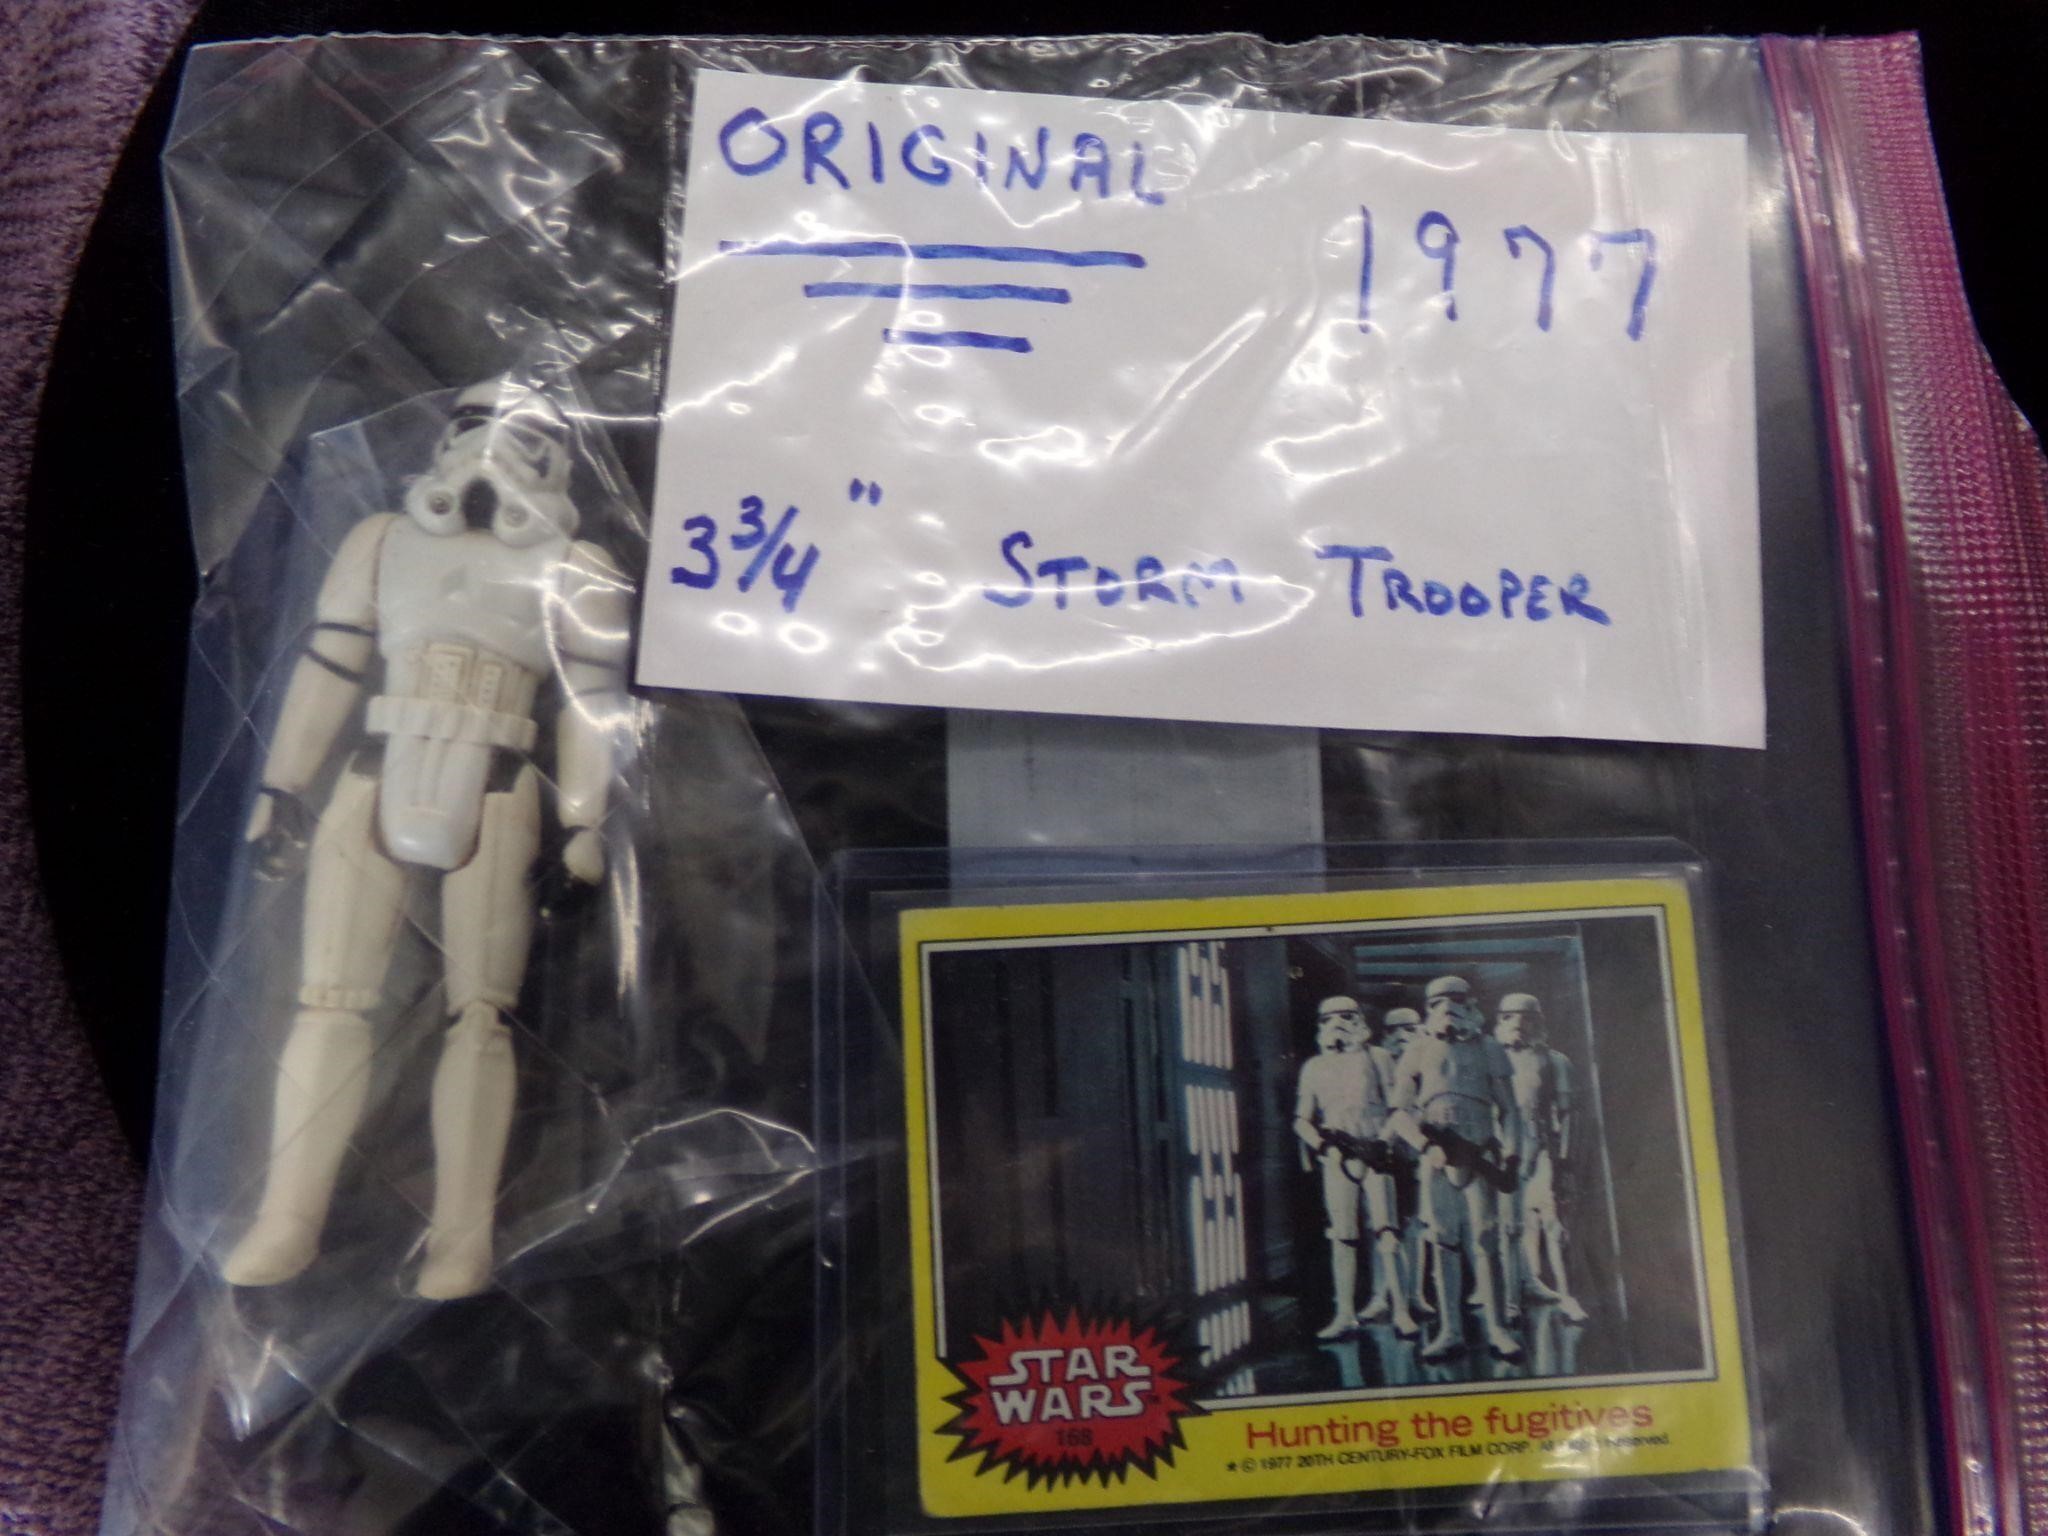 1977 Original storm trooper and card